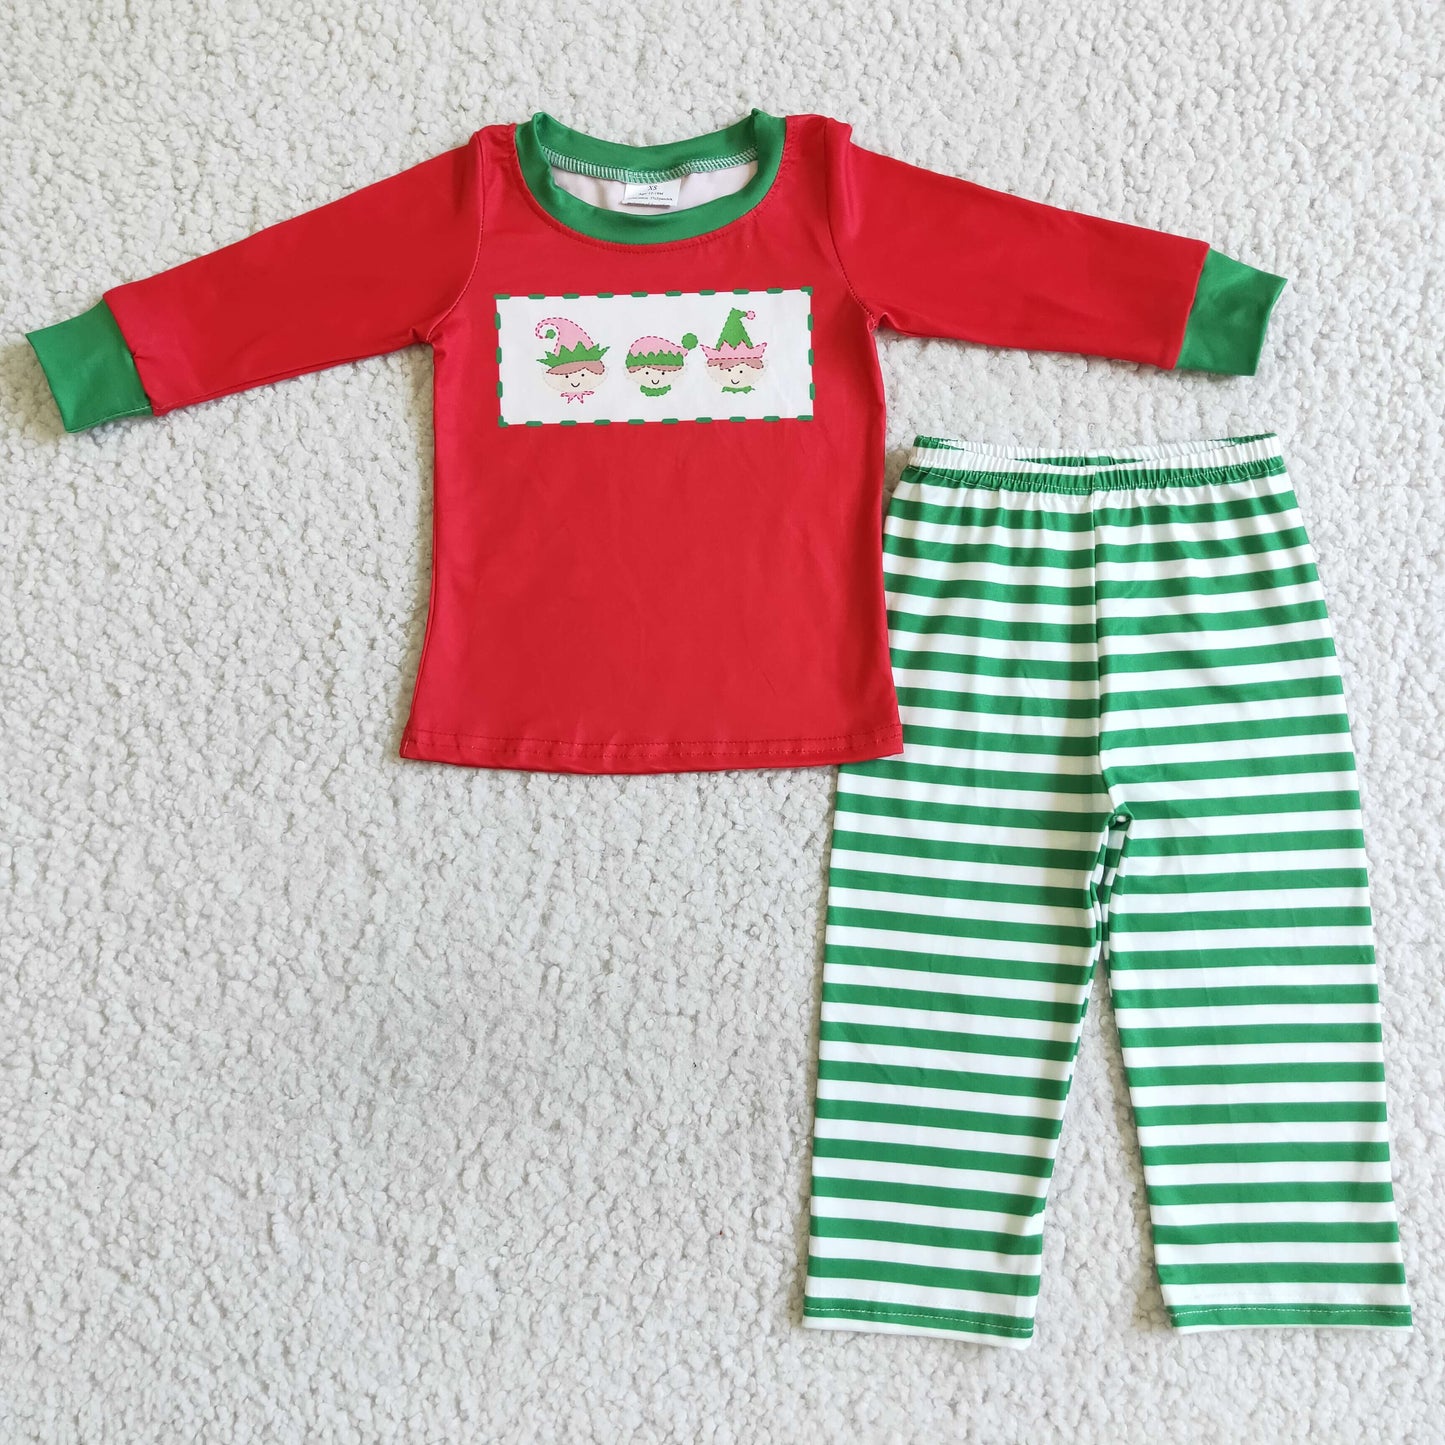 Red screen print shirt stripe pants boy Christmas pajamas